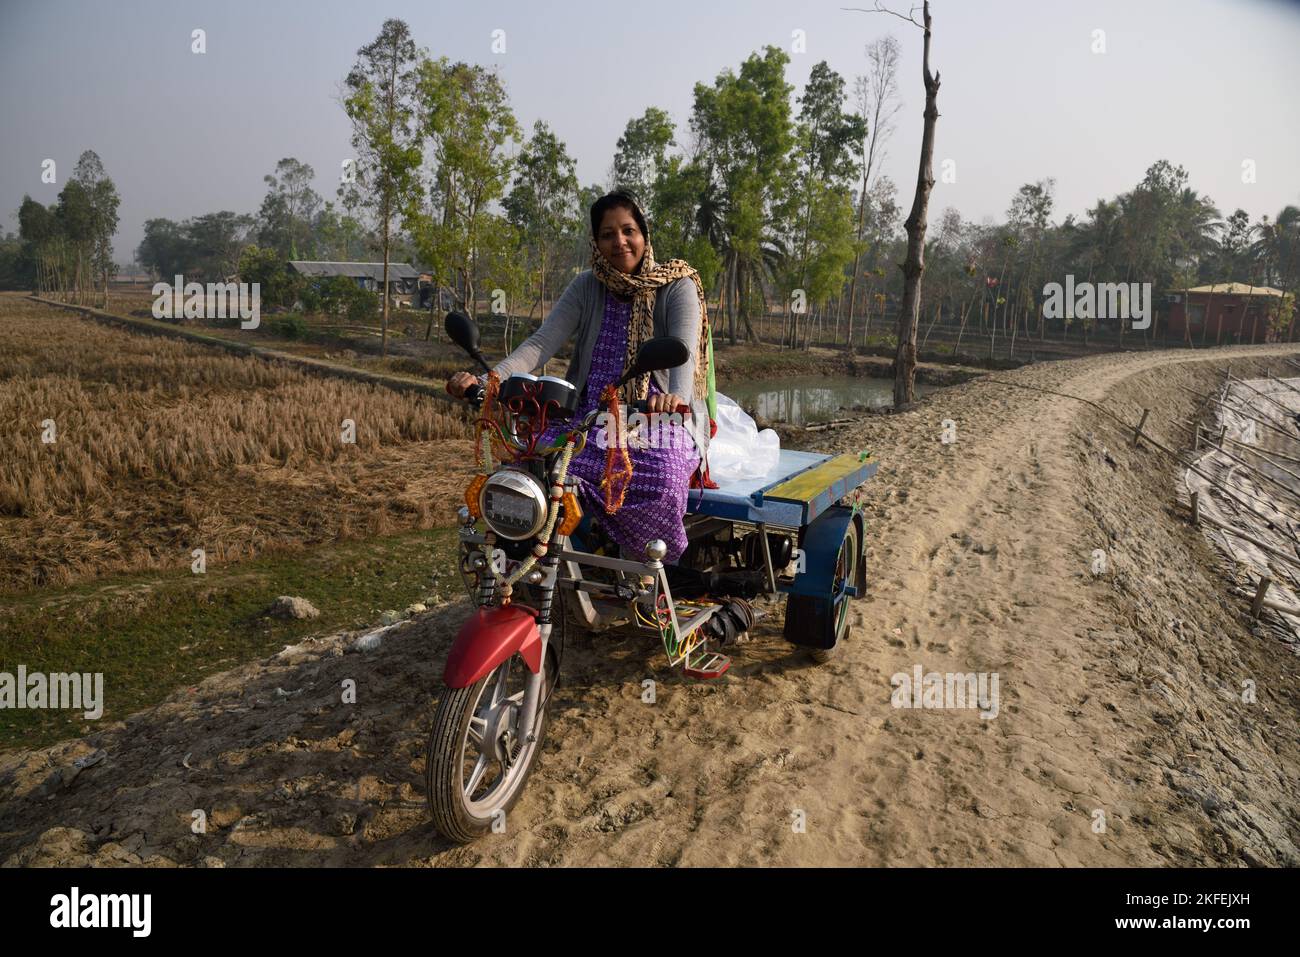 Donna in sella a triciclo elettrico, Pakhiralay, Gosaba, Sunderban, Sud 24 Pargana, Bengala Occidentale, India Foto Stock